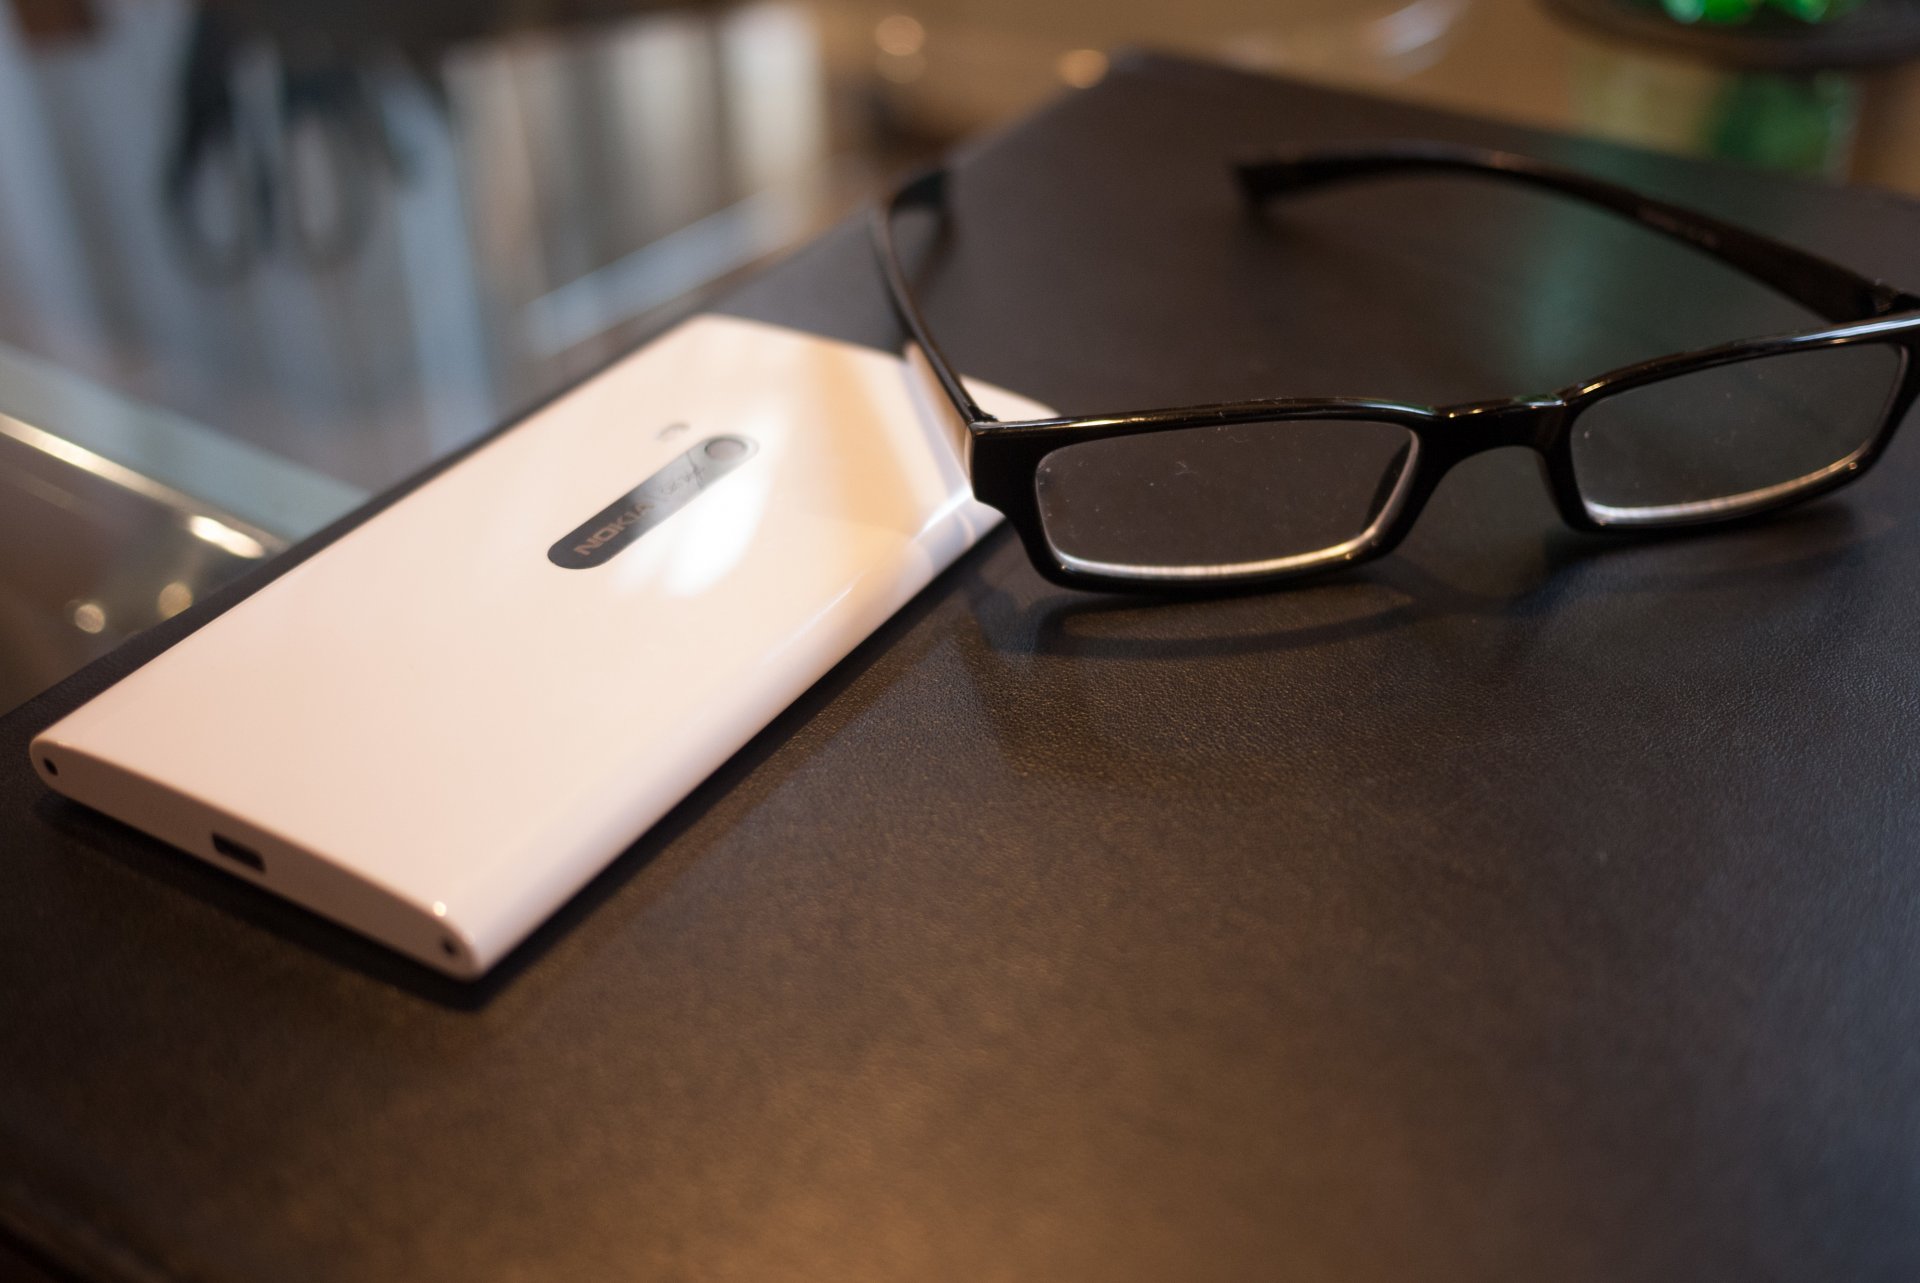 nokia lumia windows phone 8 смартфон белый очки